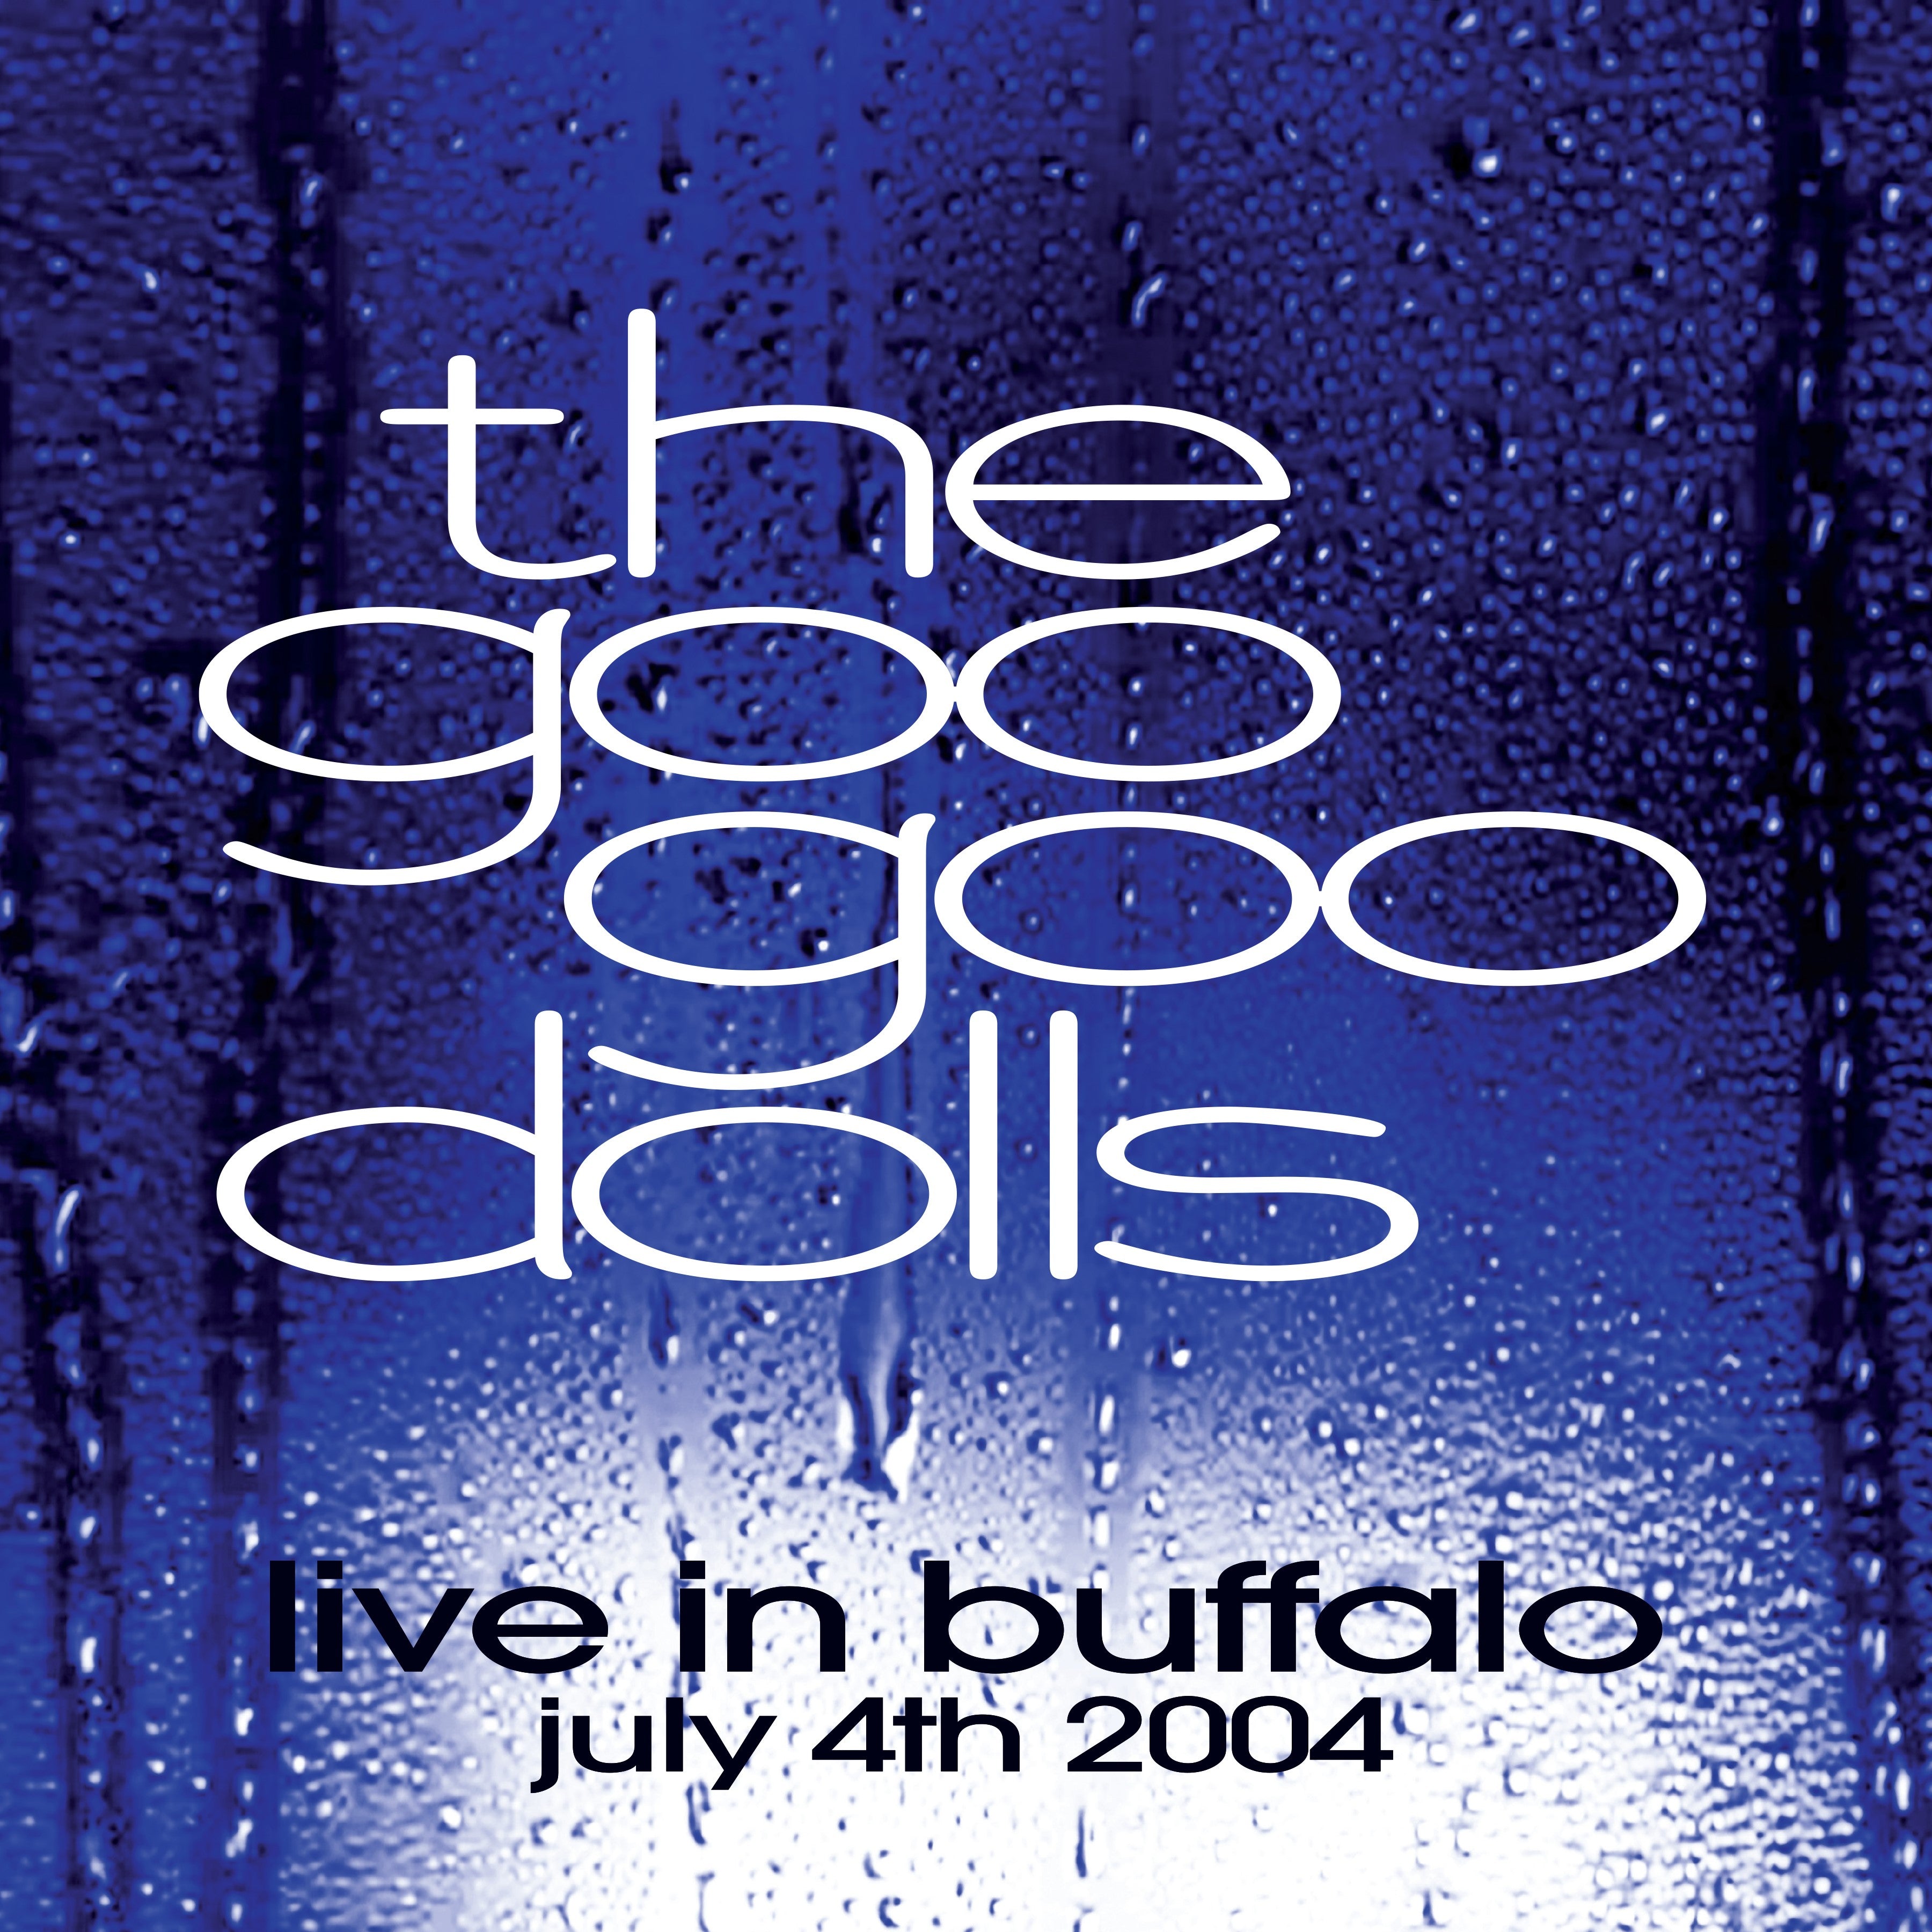 Goo Goo Dolls - Live In Buffalo (July 4th 2004): Limited Clear Vinyl 2LP